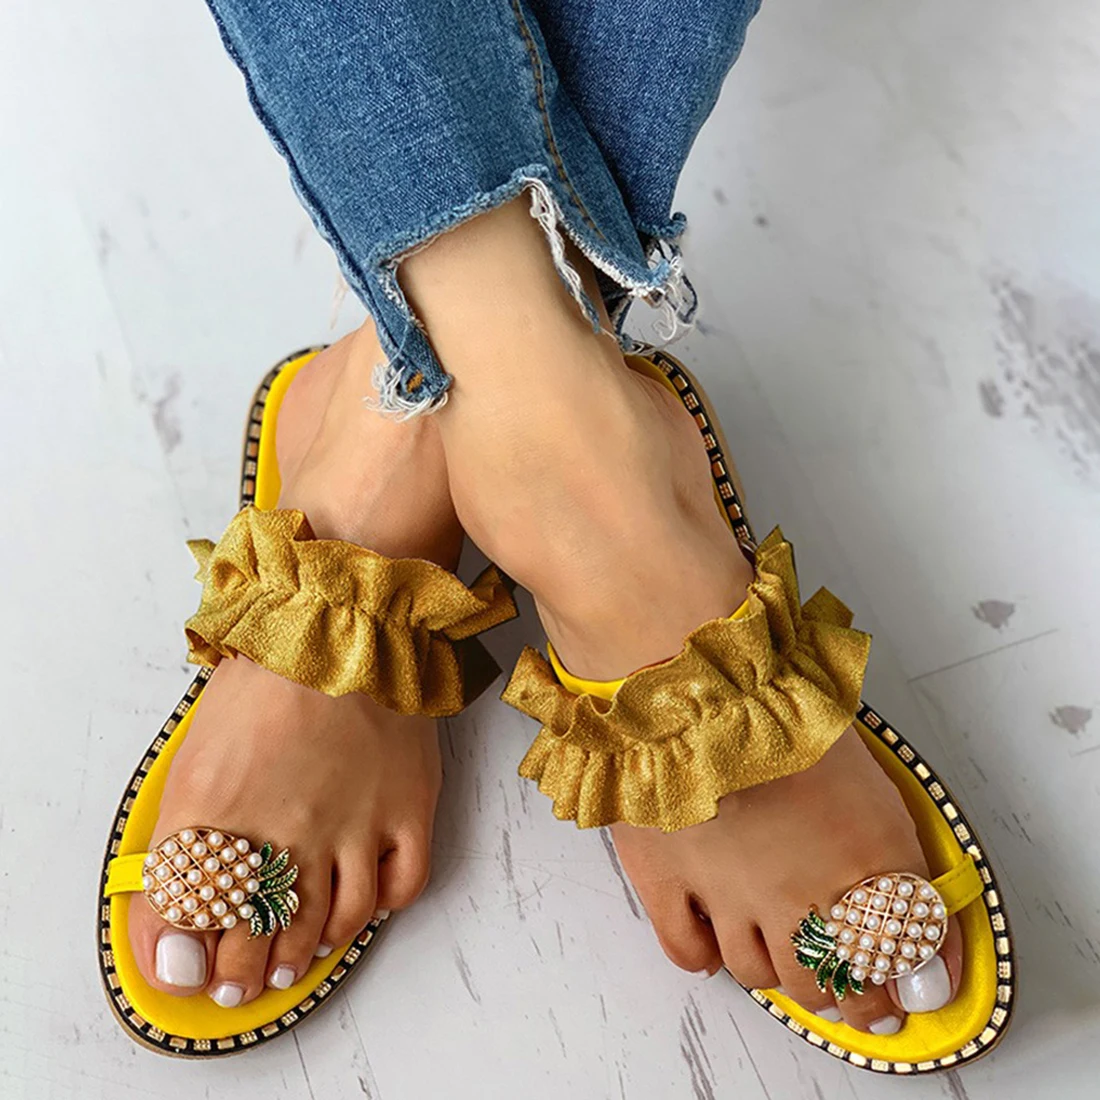 

Ladies Shoes Platform Sandalias De Mujer 2020 Women Slipper Pineapple Pearl Flat Toe Bohemian Casual Fruit Beach Sandals, Picture shown